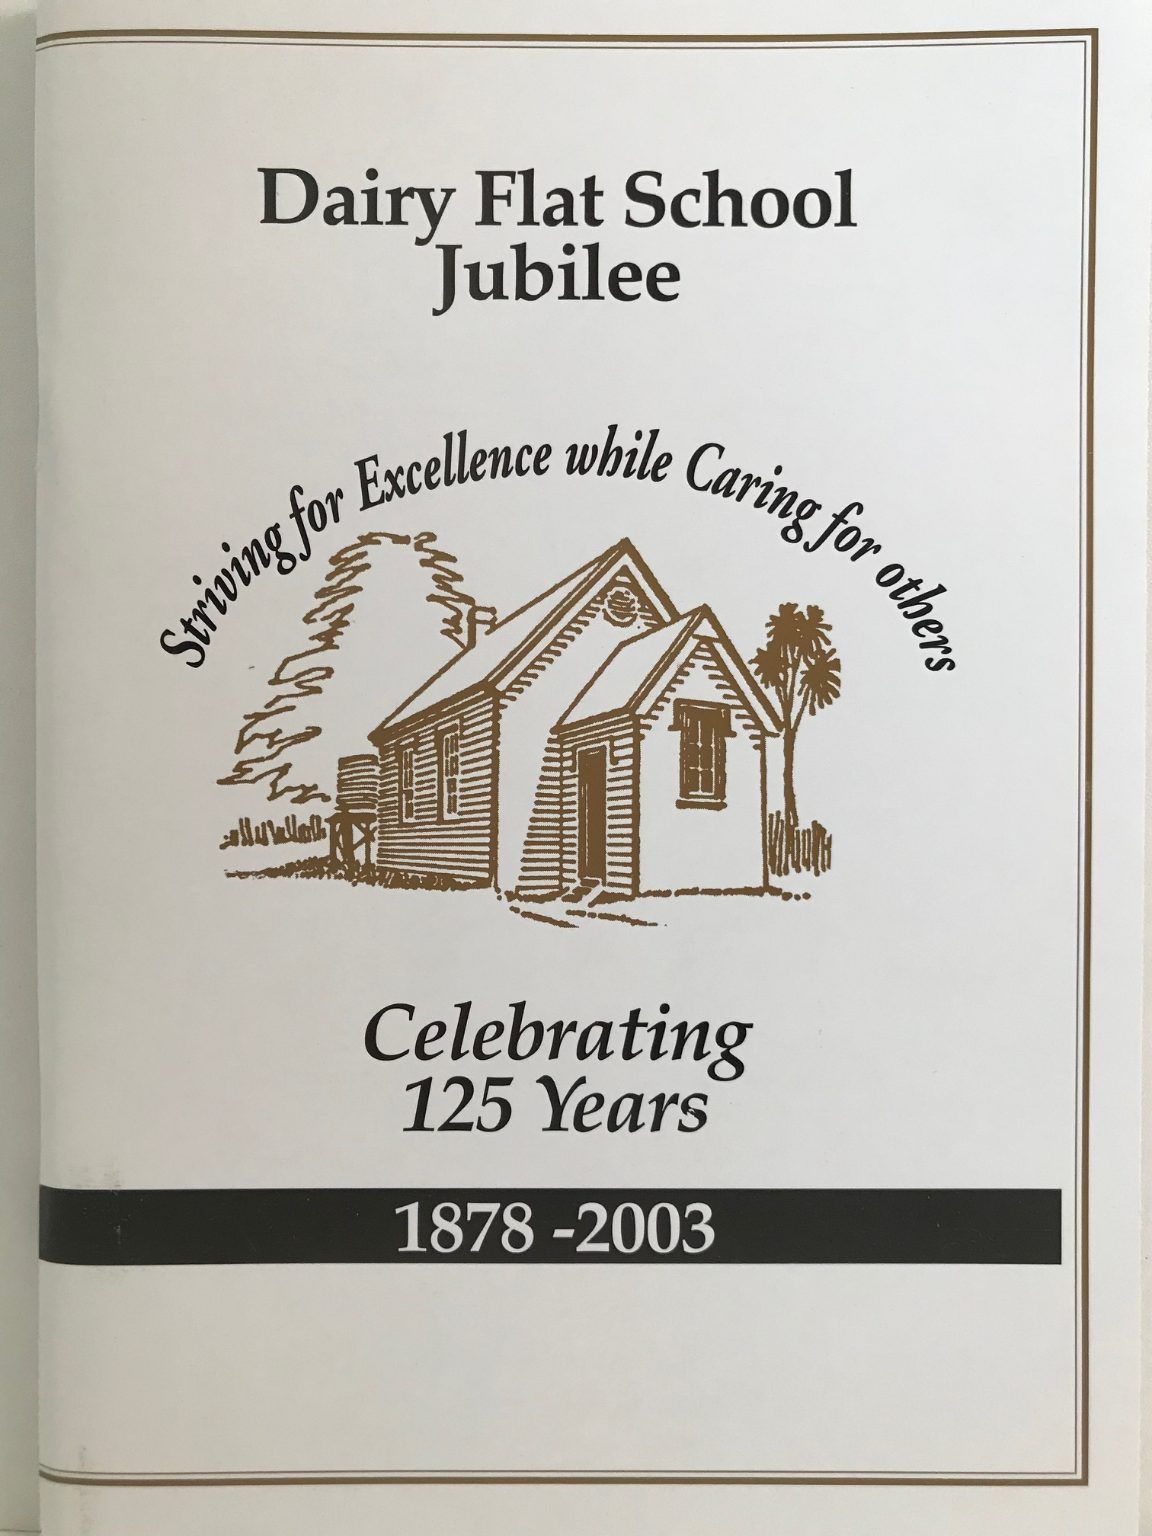 DAIRY FLAT SCHOOL JUBILEE: Celebrating 125 Years 1878 - 2003